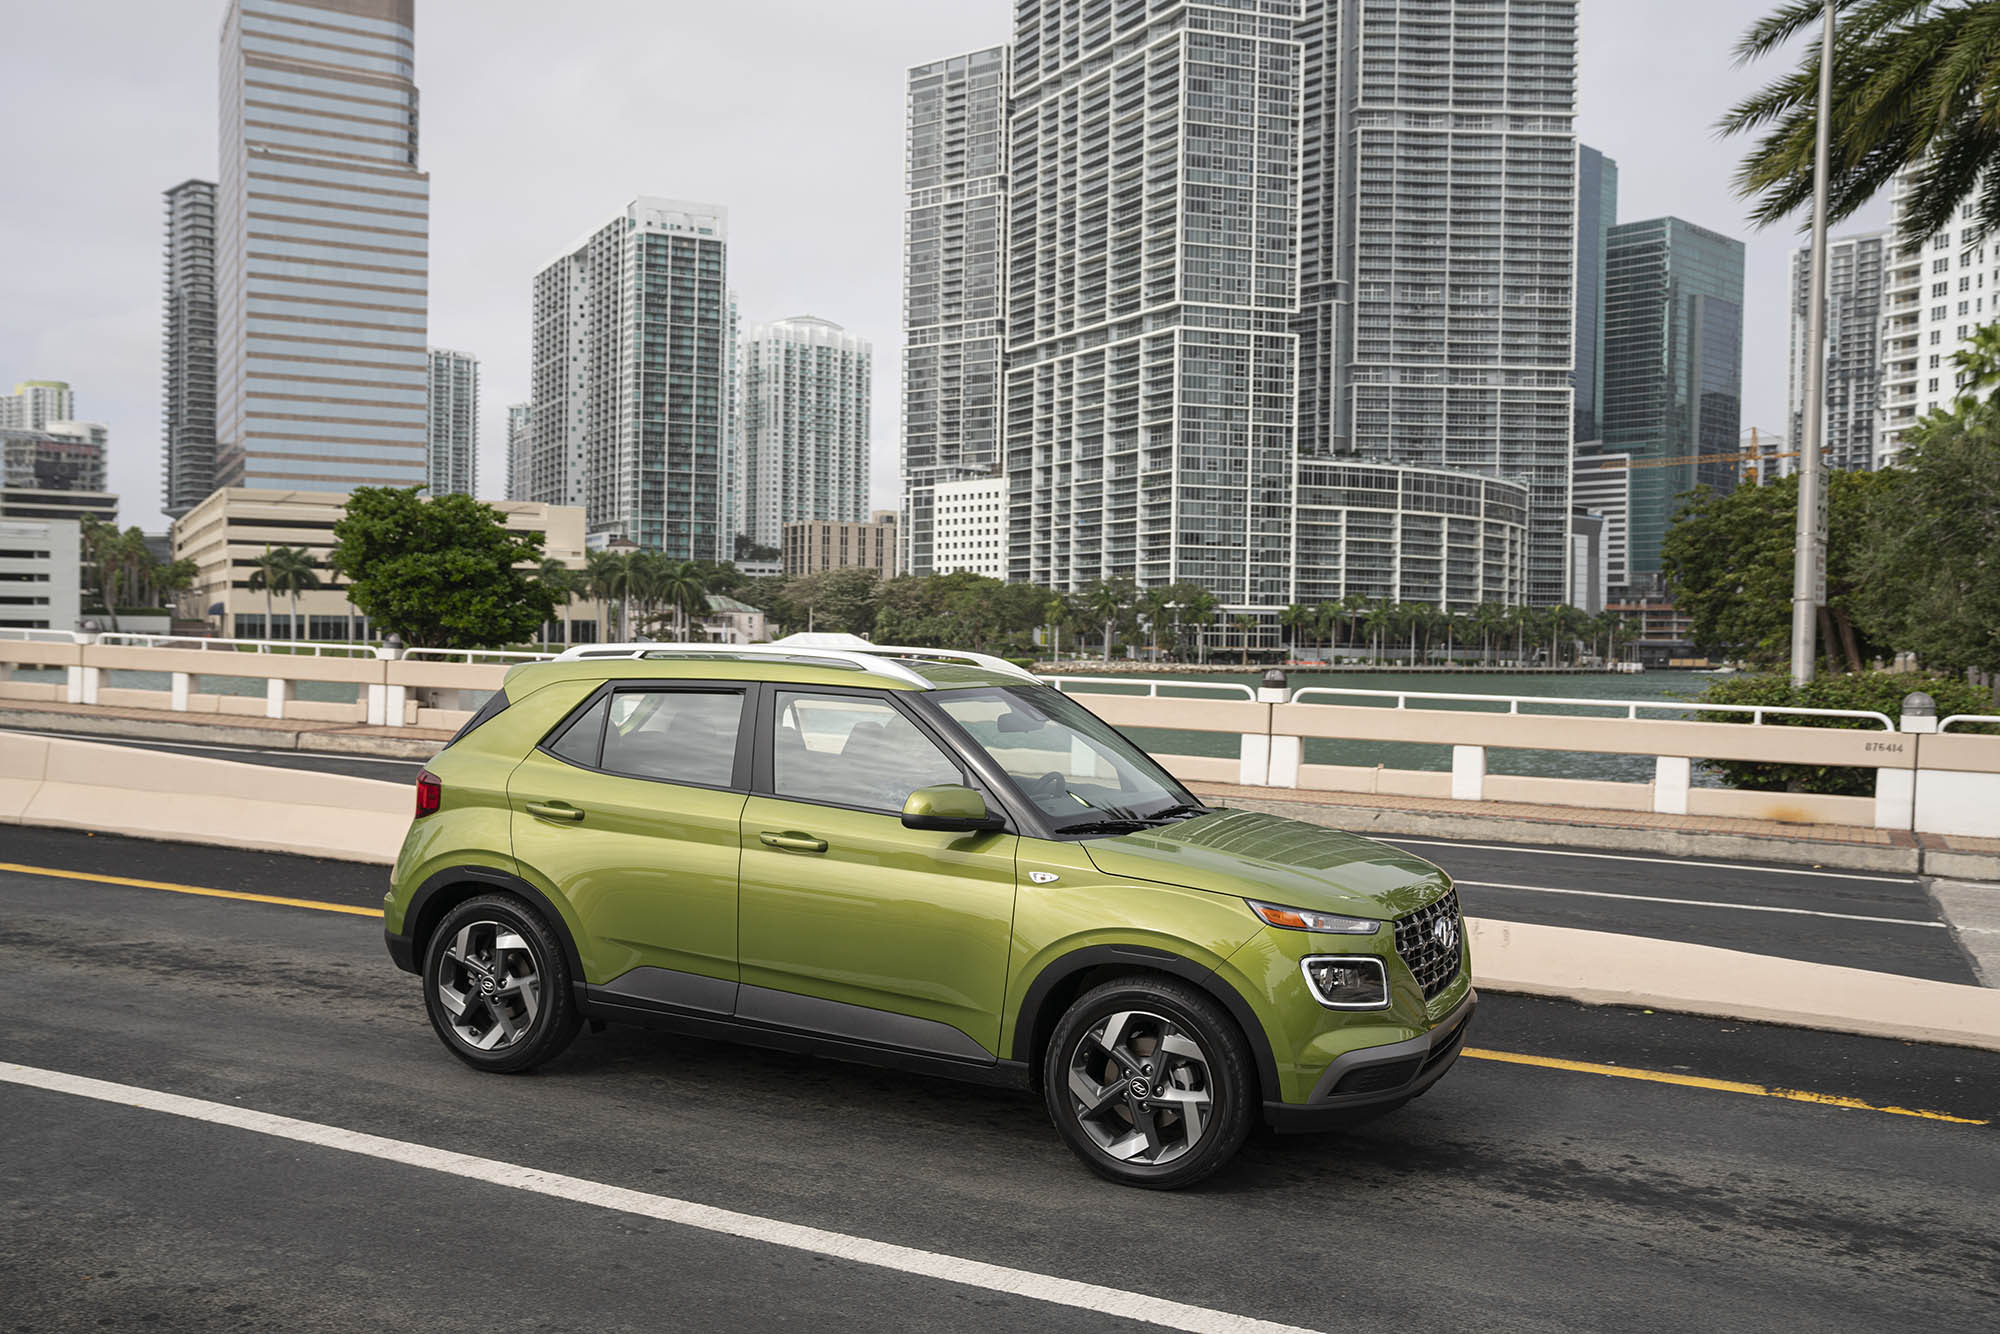 Green Hyundai Venue driving in urban setting